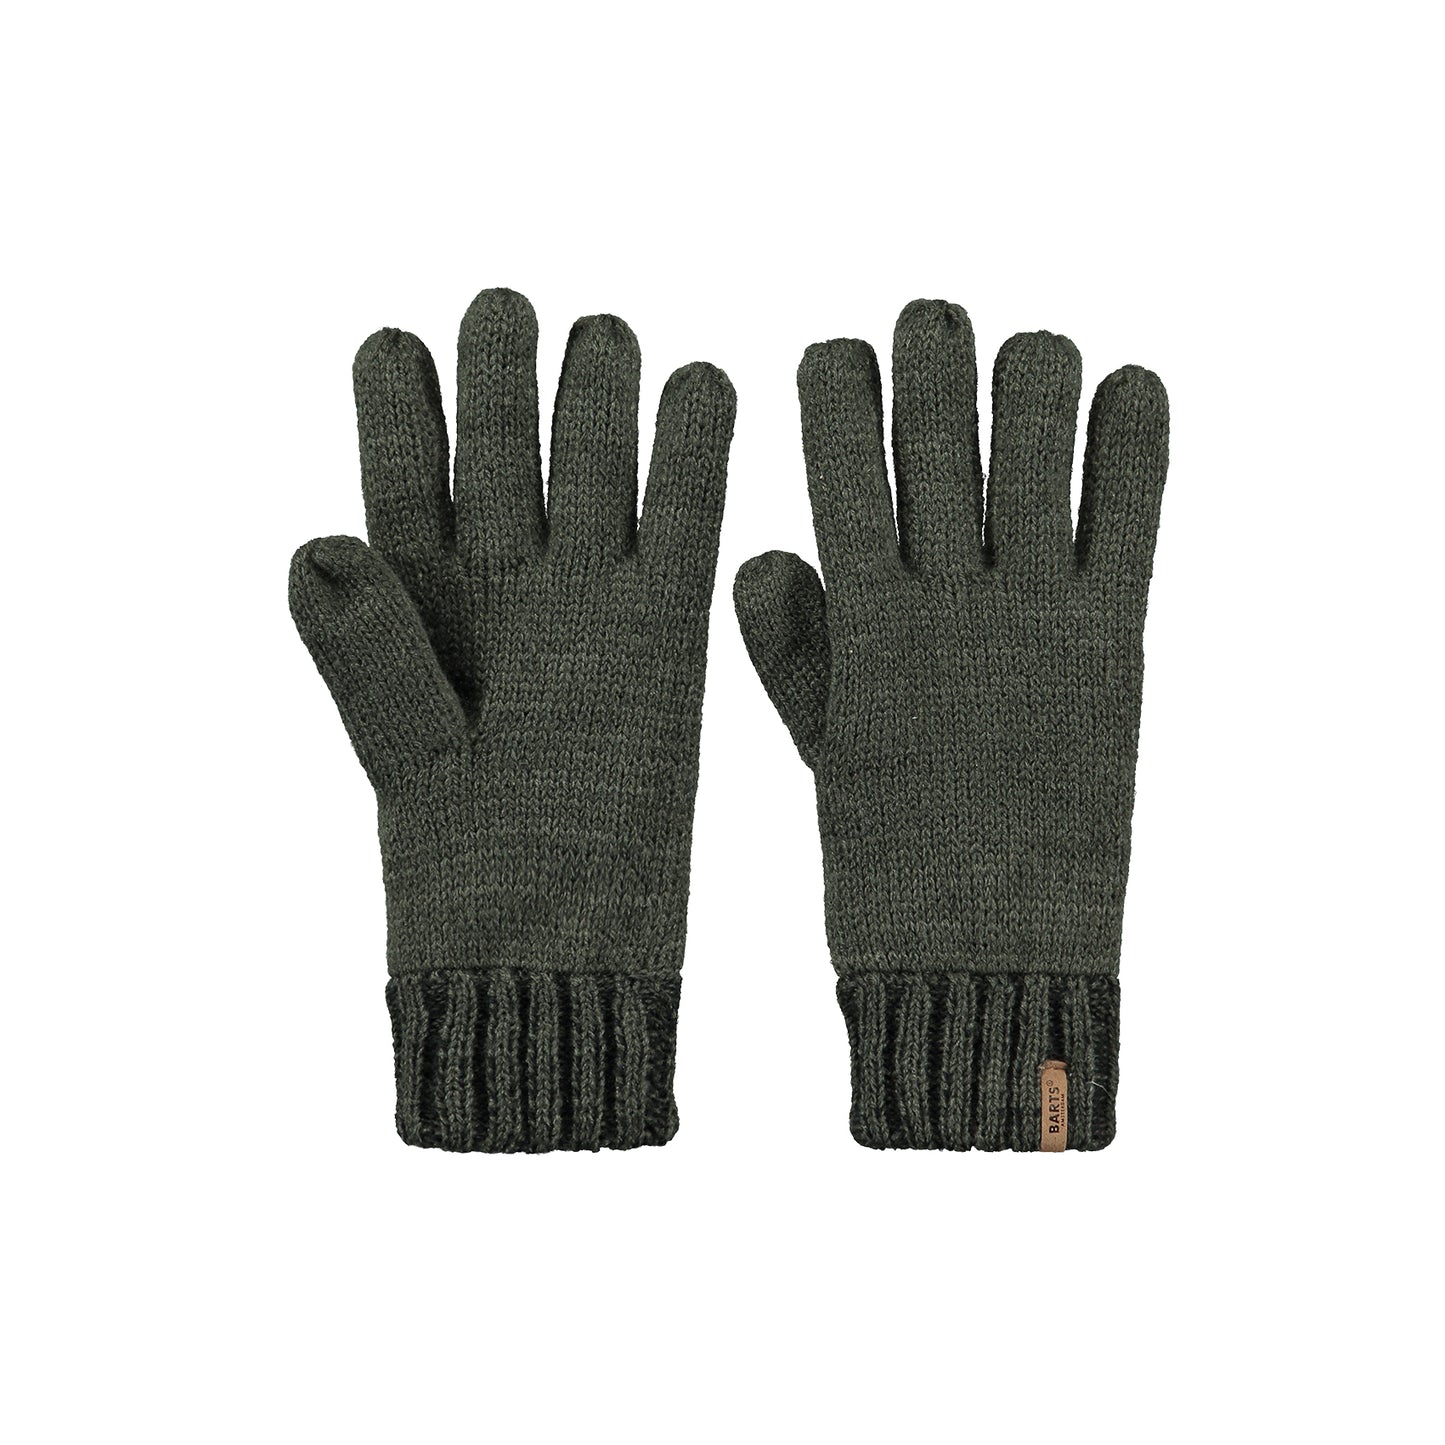 BARTS - brighton gloves - army